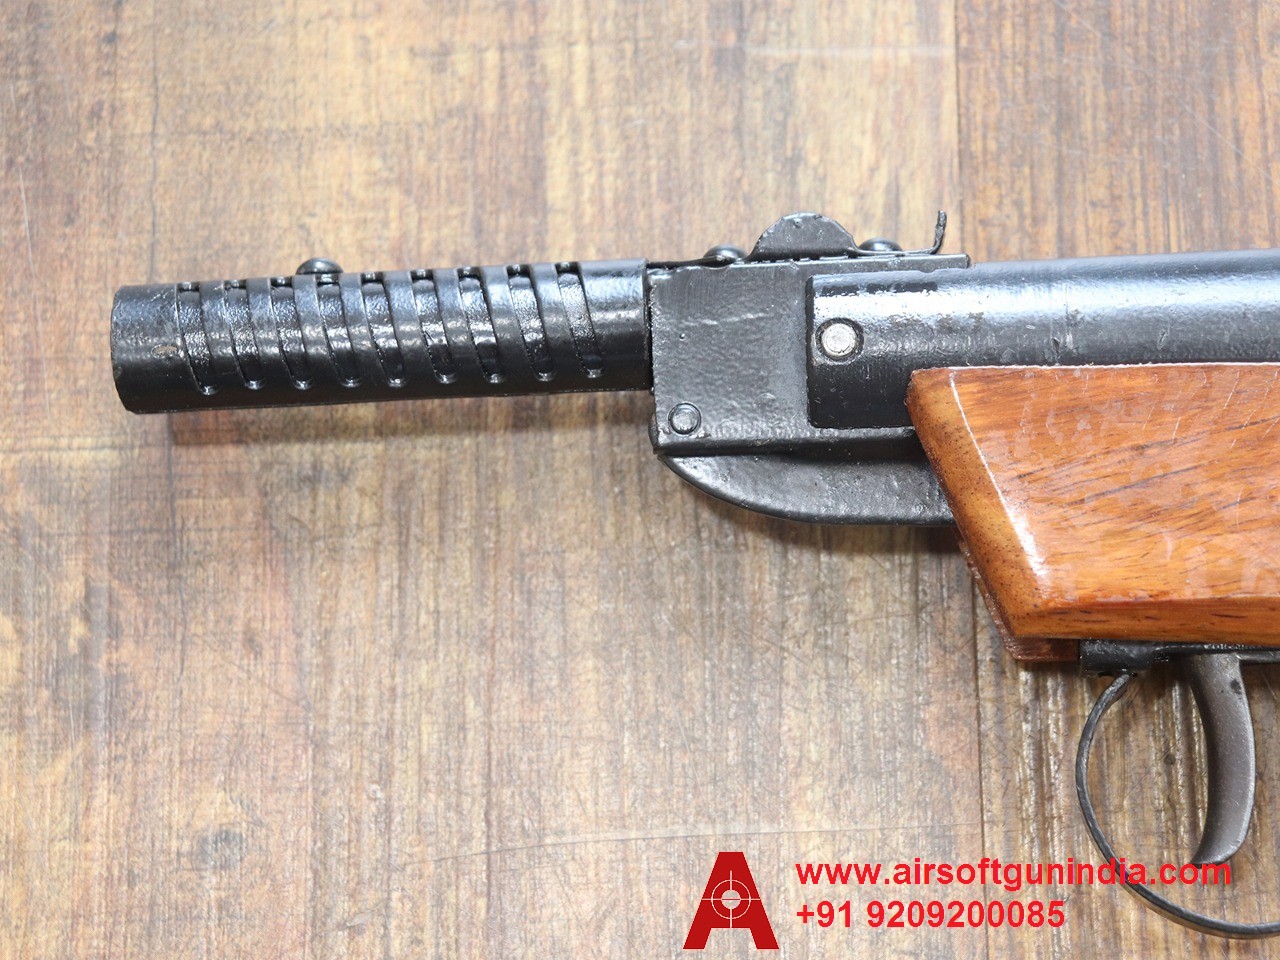 Prince Wooden Grip Single-Shot .177 Caliber / 4.5 Mm Indian Air Pistol By Airsoft Gun India.